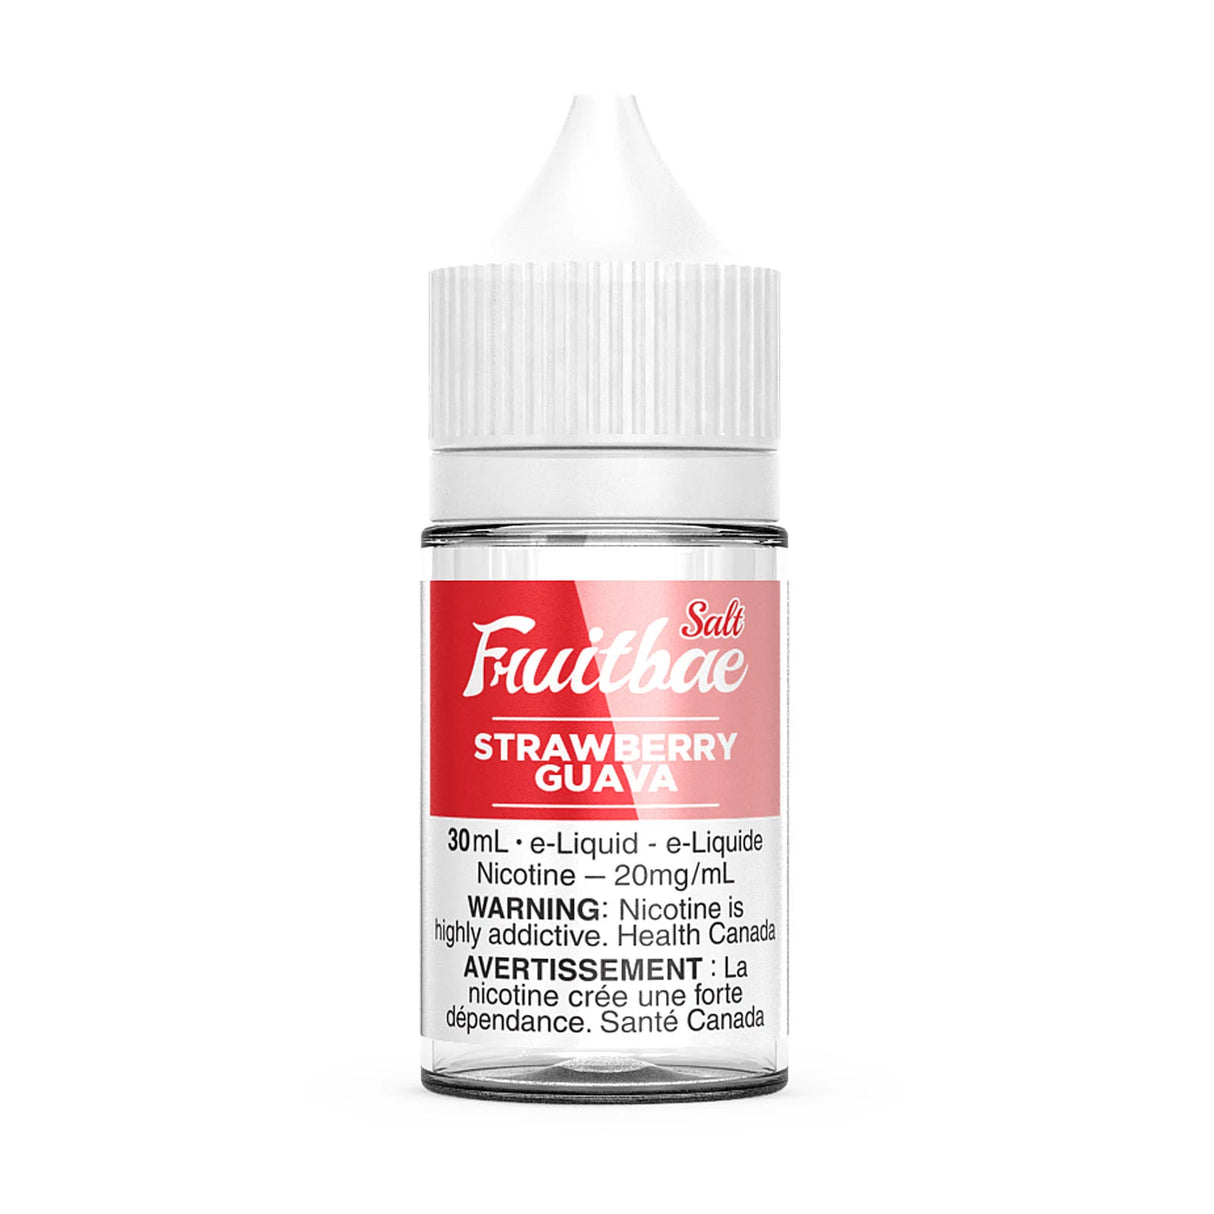 SALE! FruitBae E-Liquid - Strawberry Guava - 30ml